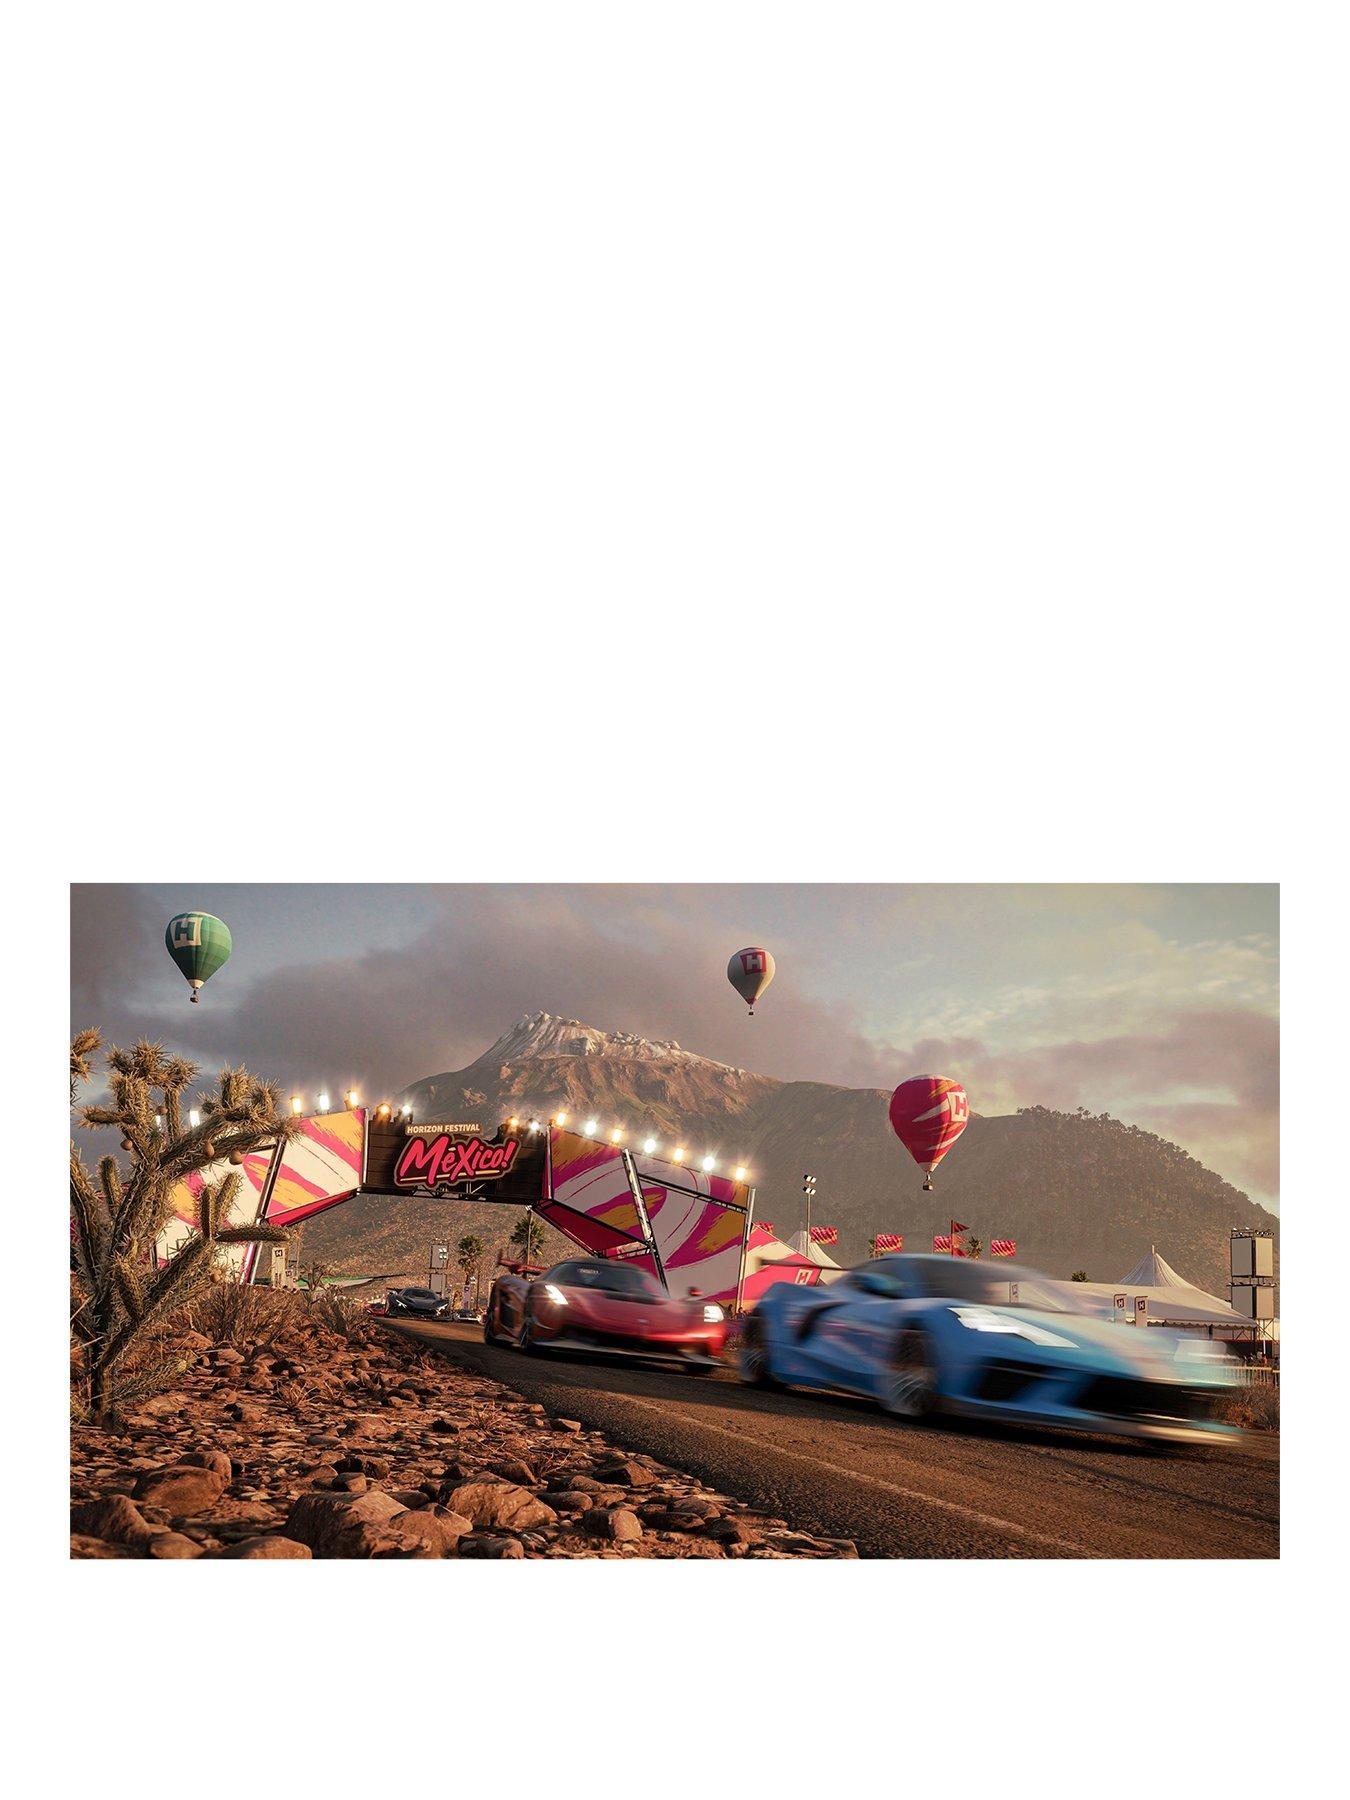 Xbox Forza Horizon 5: Premium Edition - Digital Download